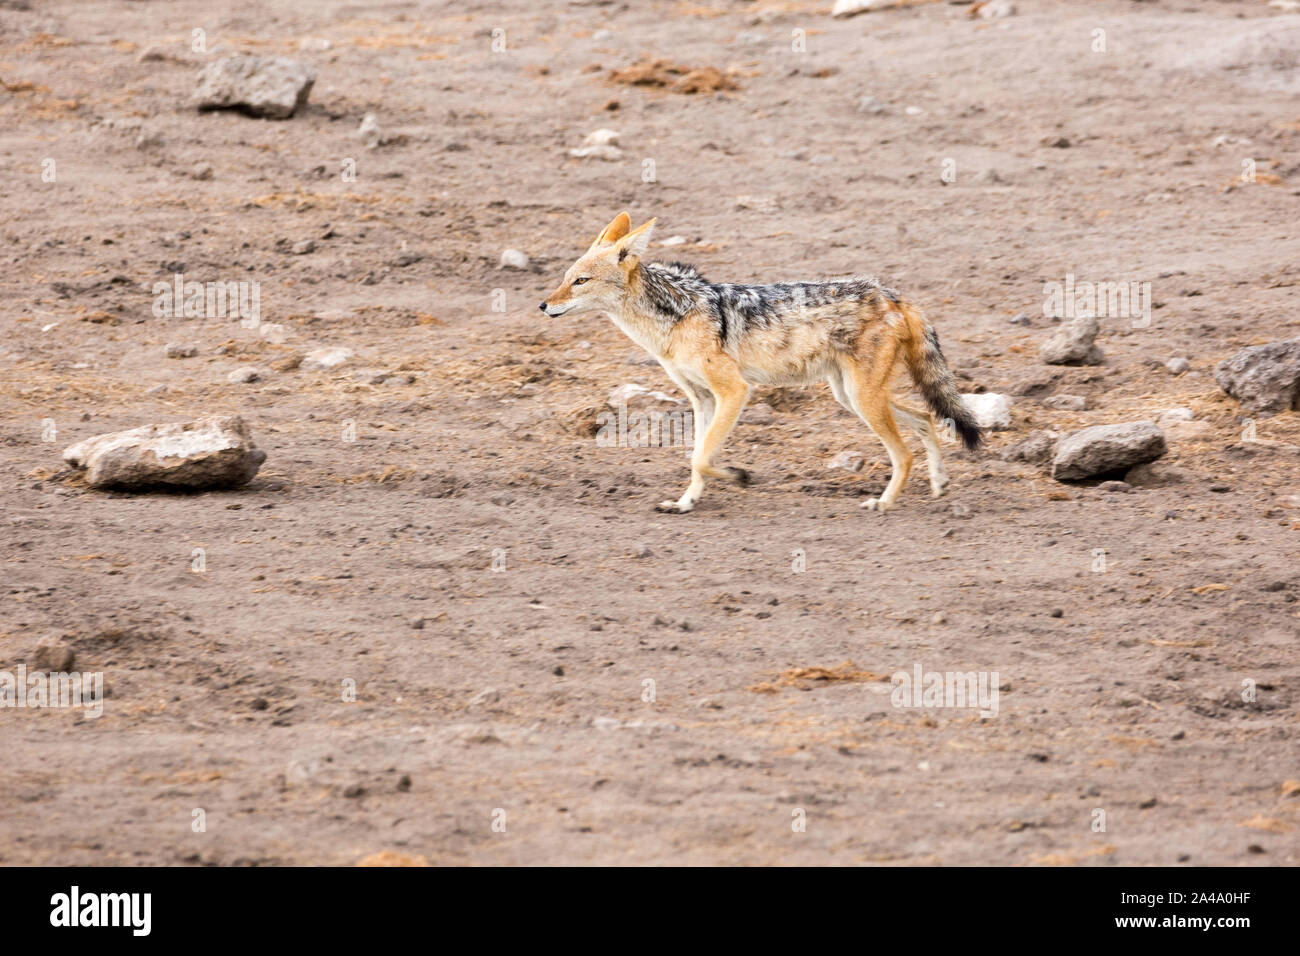 A jackal walking through a barren landscape, Etosha, Namibia, Africa Stock Photo